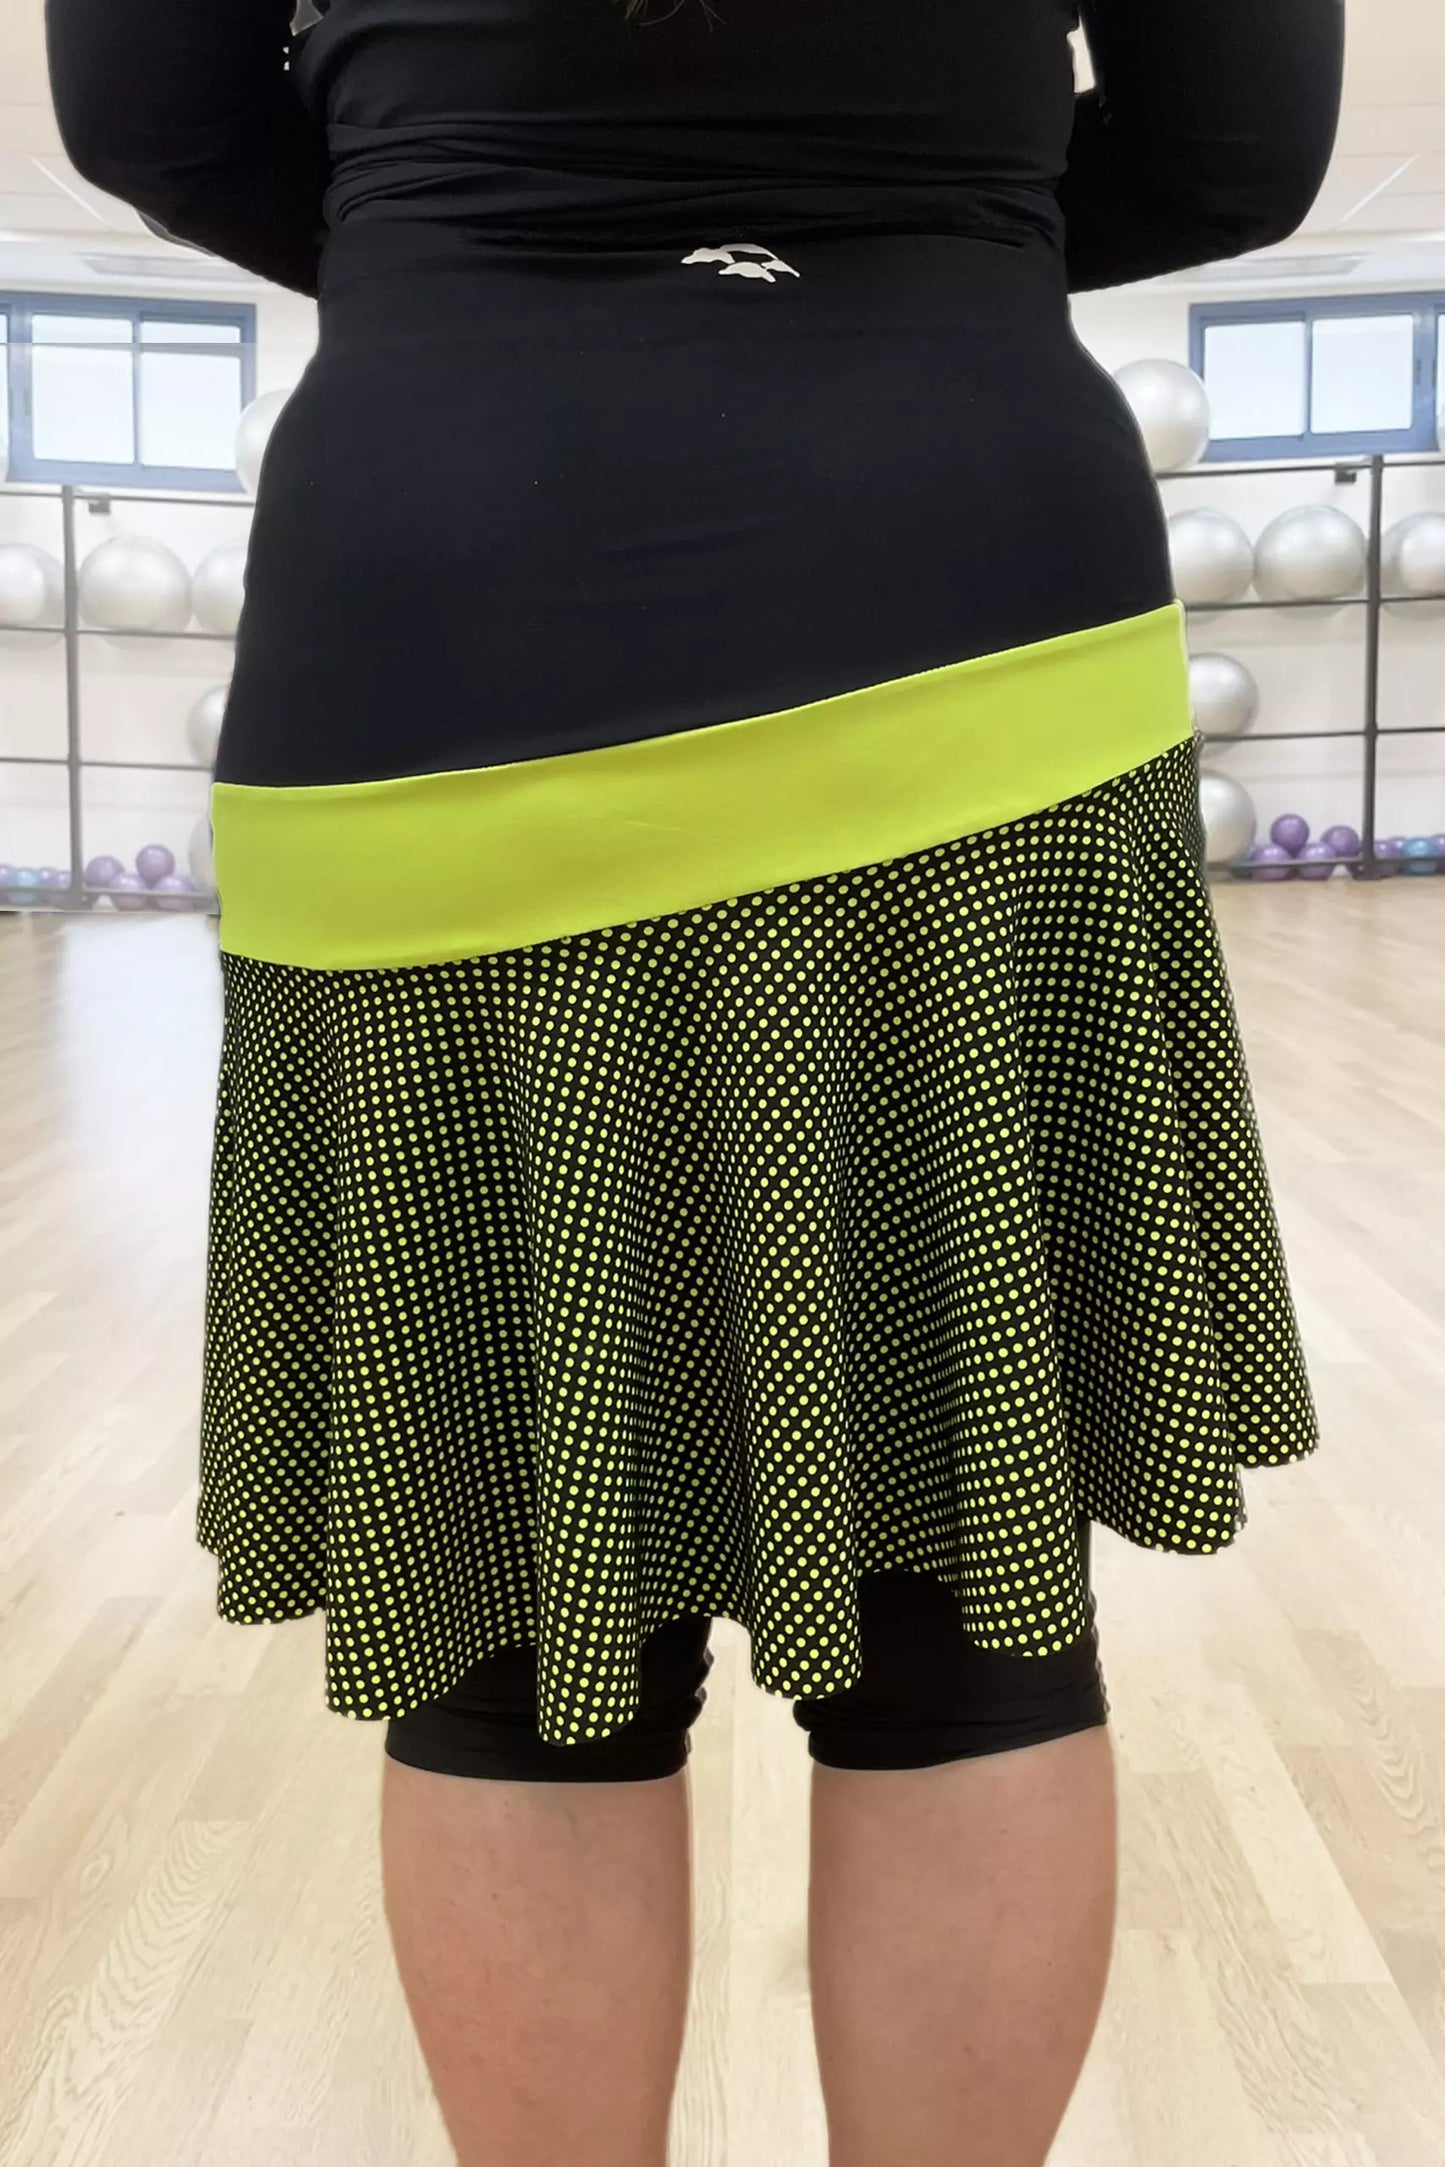 Fun Neon Yellow Asymmetrical Flair Skirt